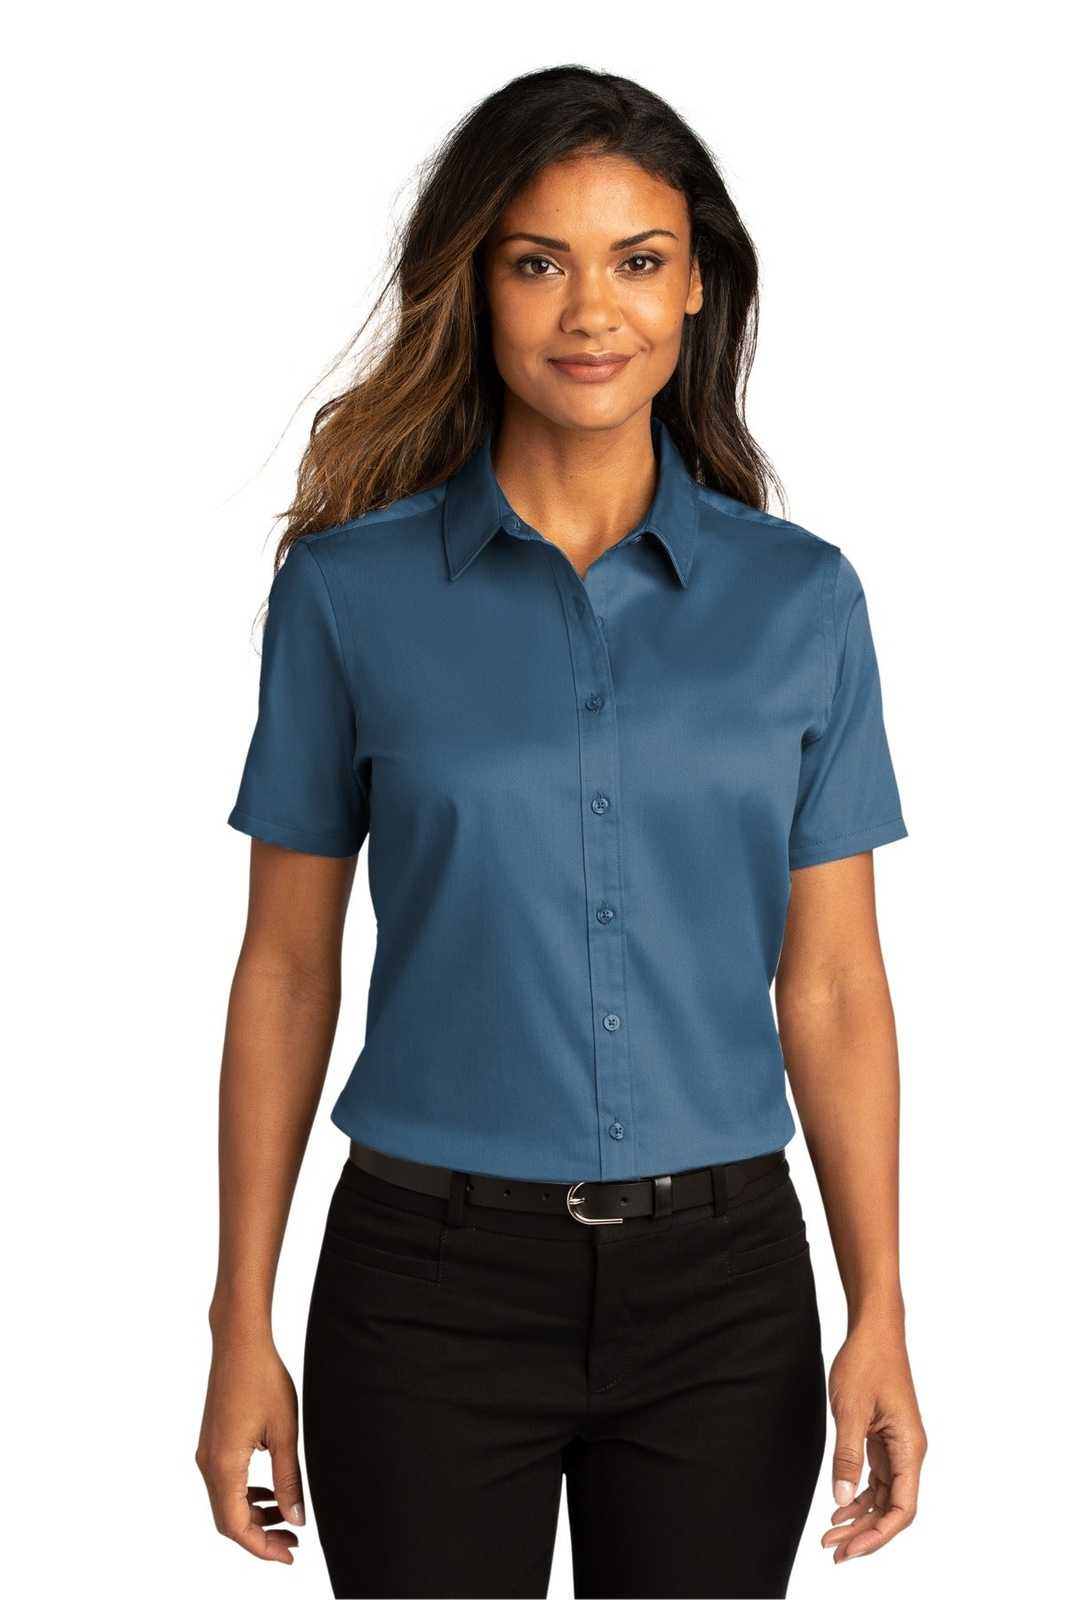 Port Authority LW809 Ladies Long Sleeve SuperPro React Twill Shirt - Regatta Blue - HIT a Double - 1